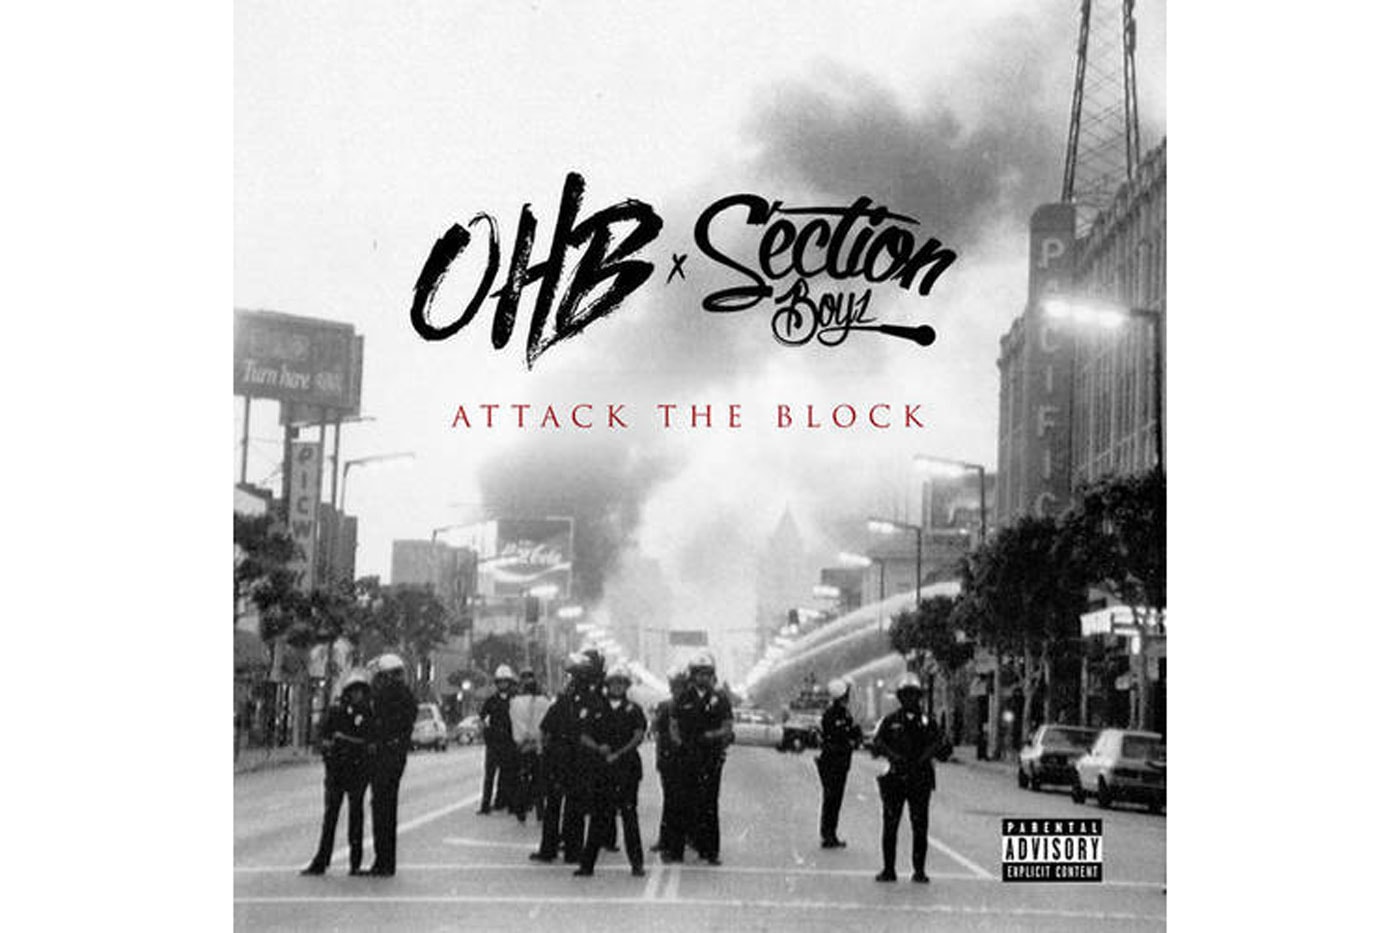 Chris Brown OHB Section Boyz Attack The Block Mixtape Download Stream